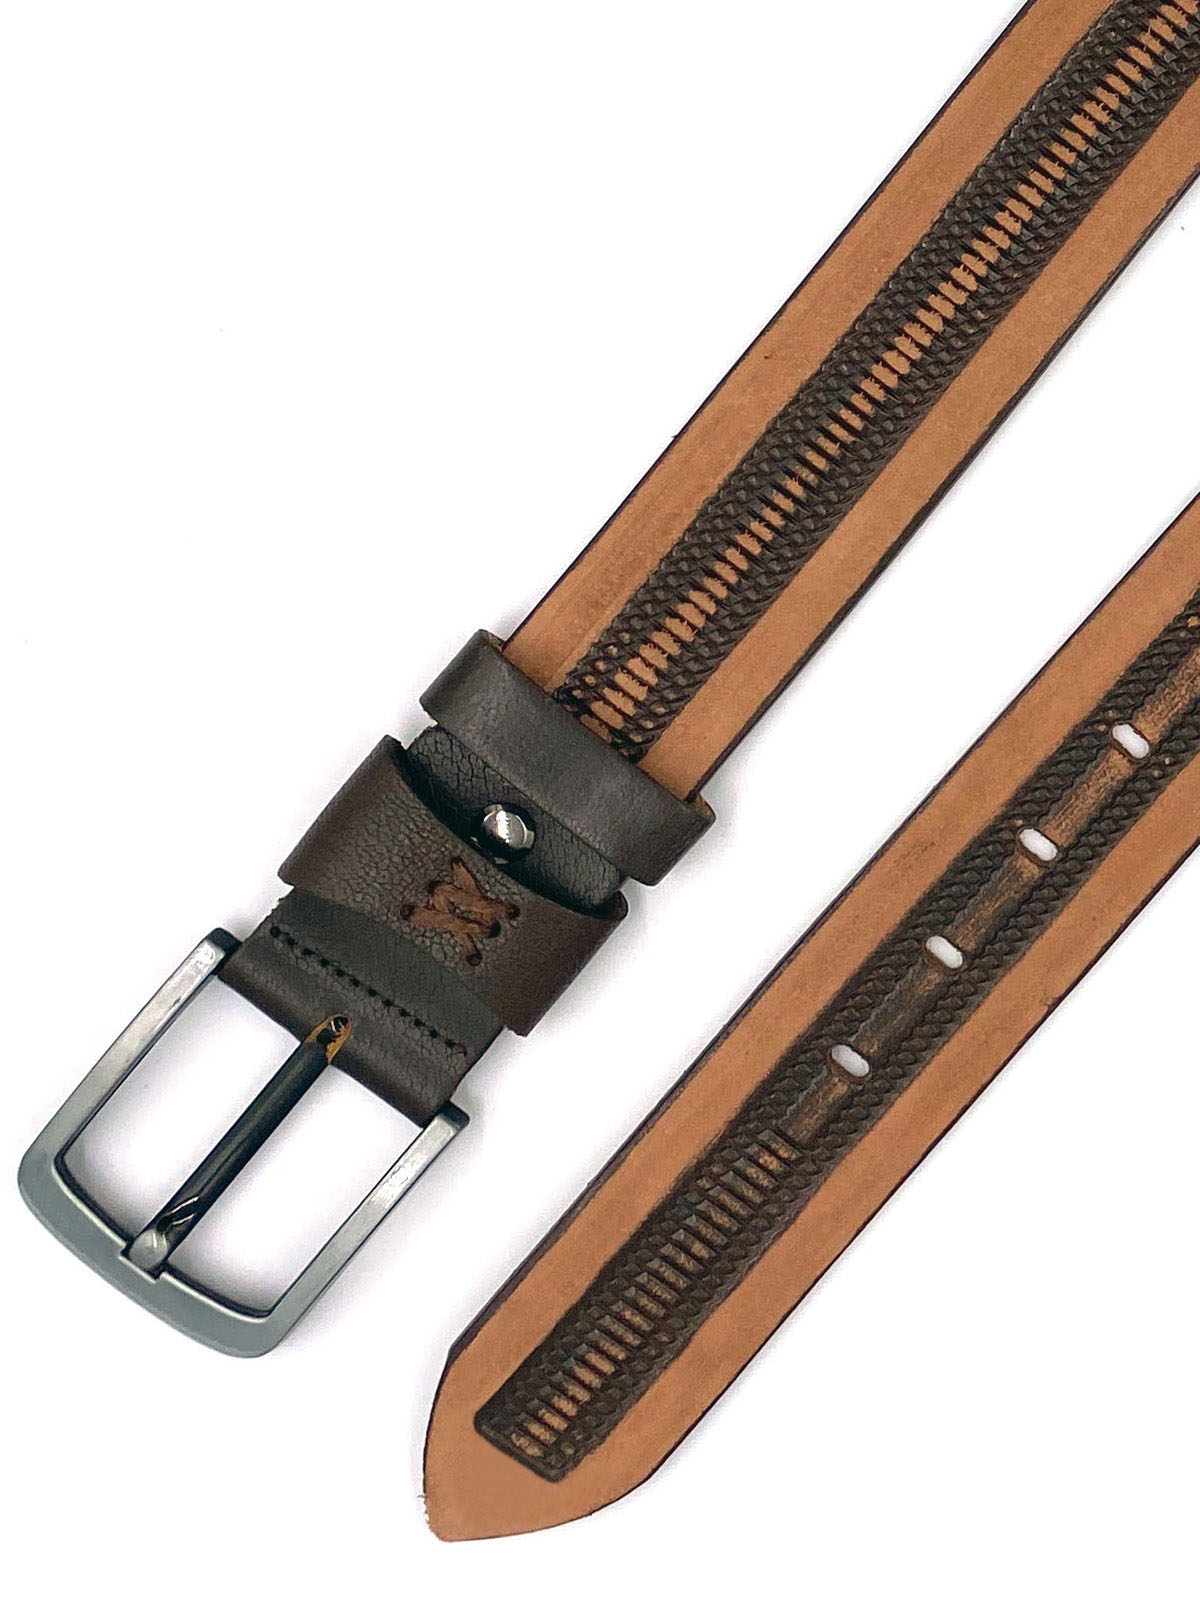  sport belt genuine leather  - 10436 - € 21.37 img3